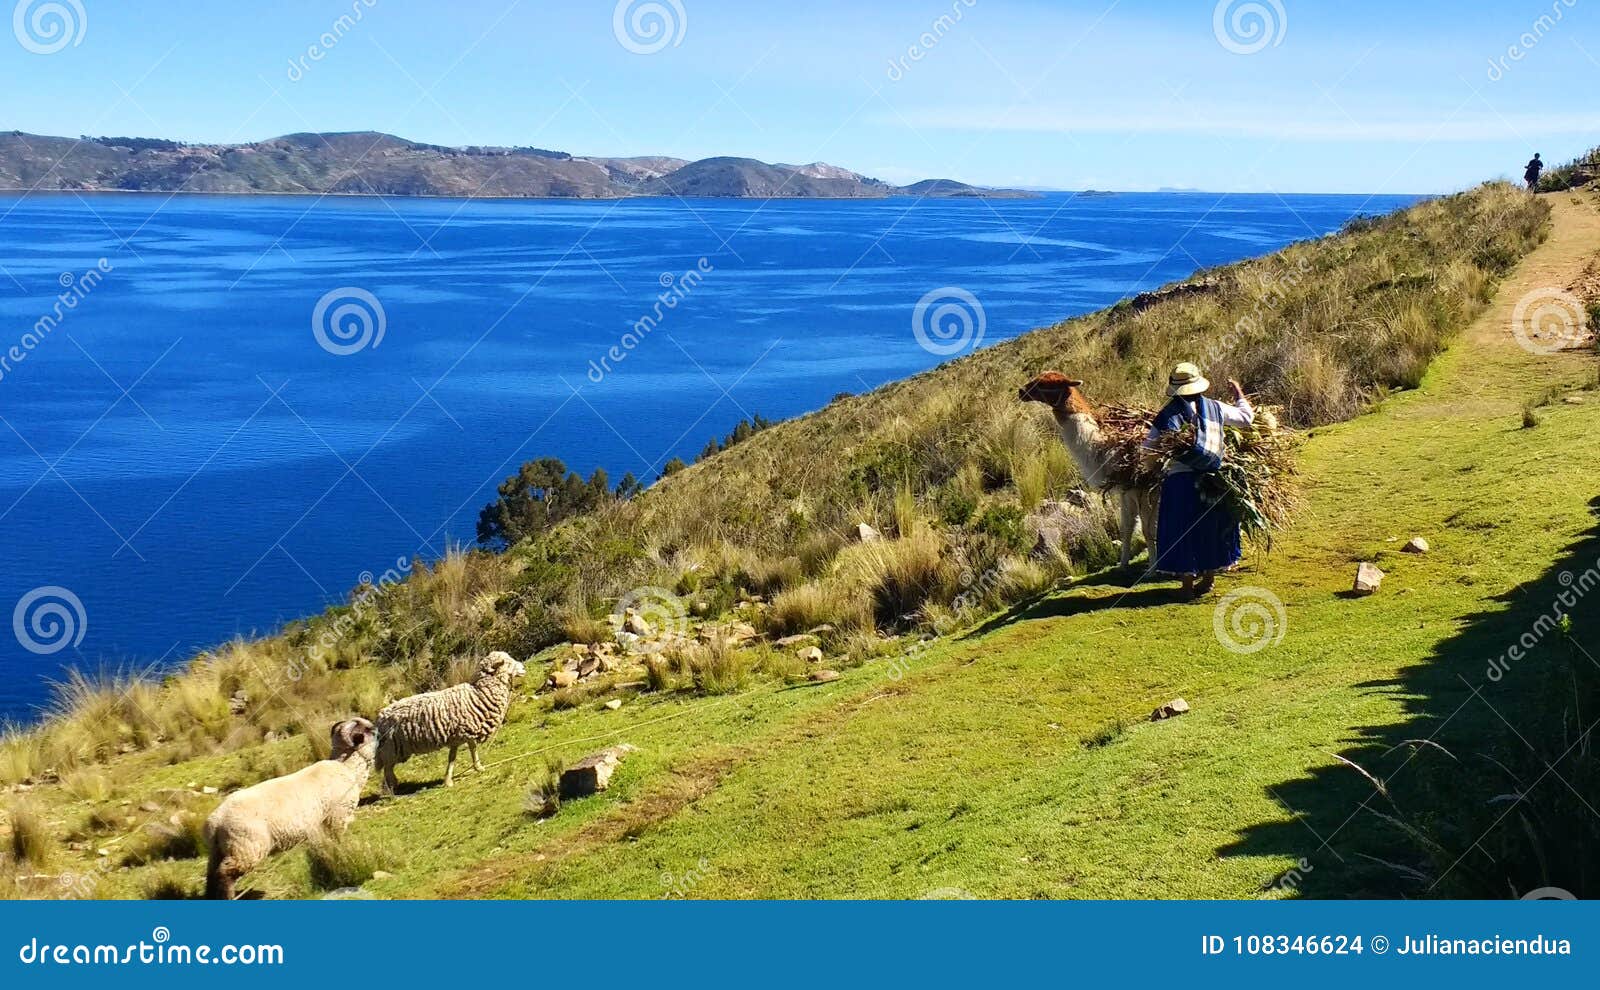 moon island, lake titicaca bolivia